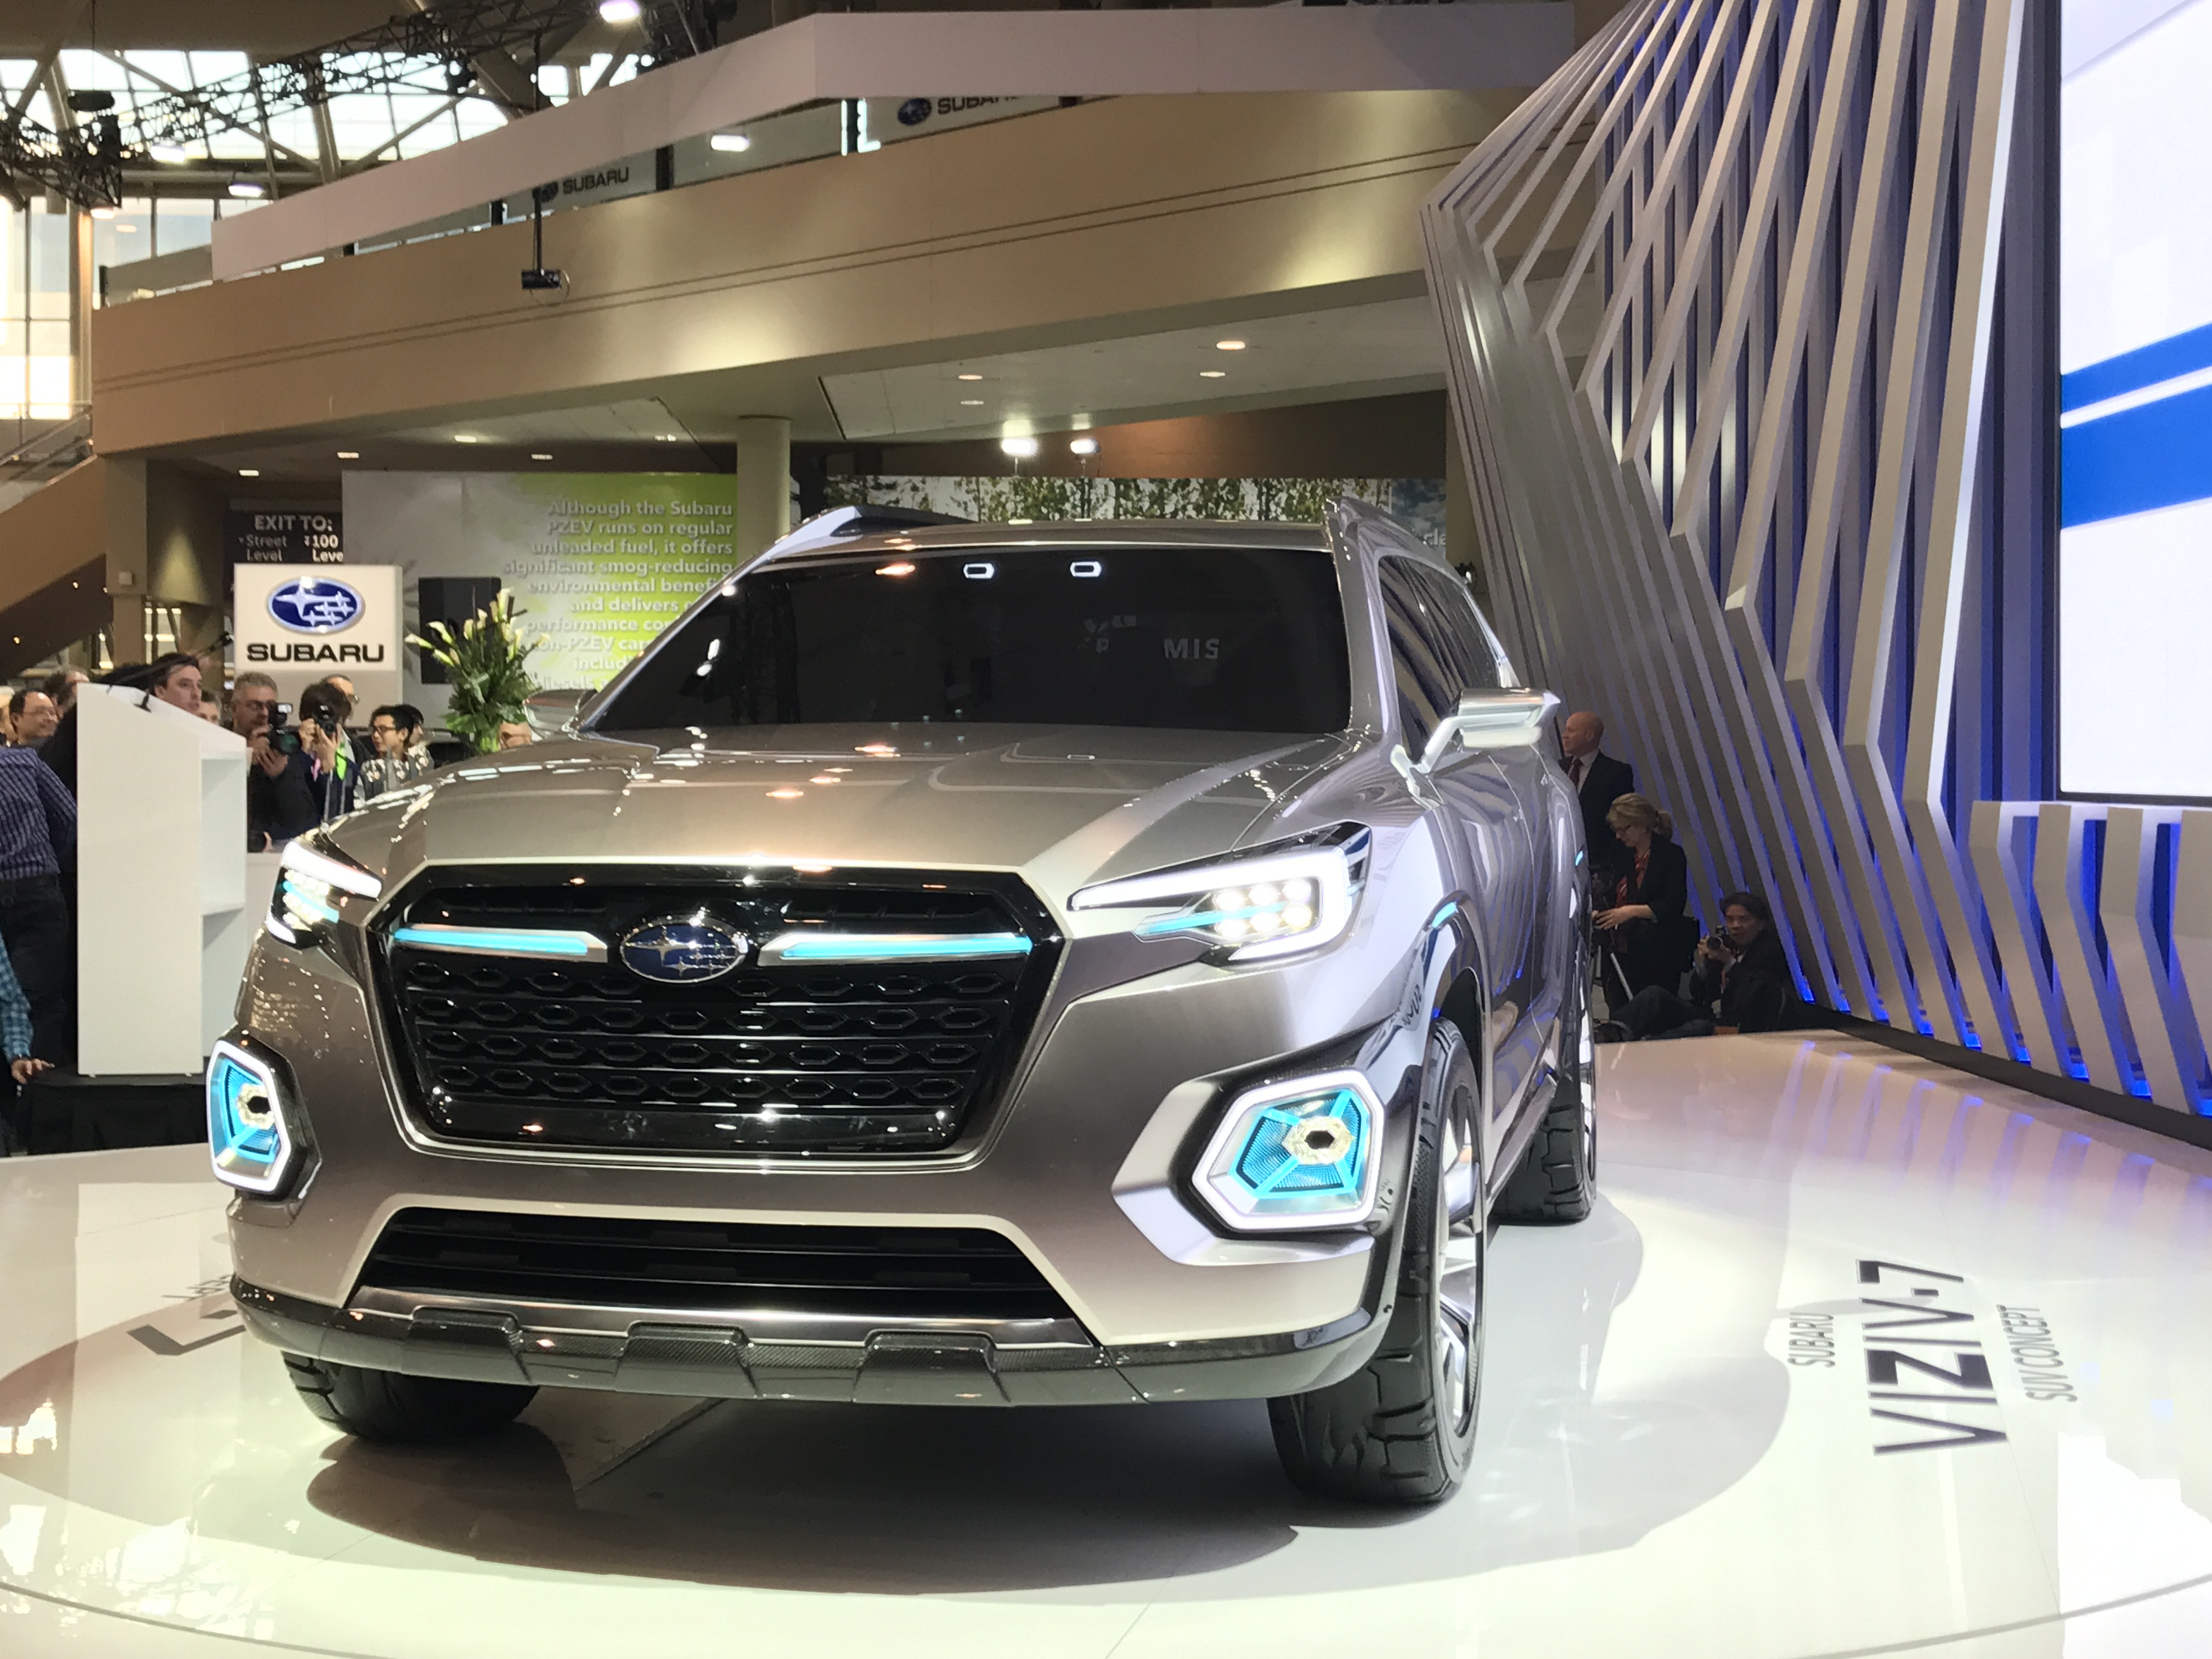 Subaru - Canadian International Autoshow #CIAS2017